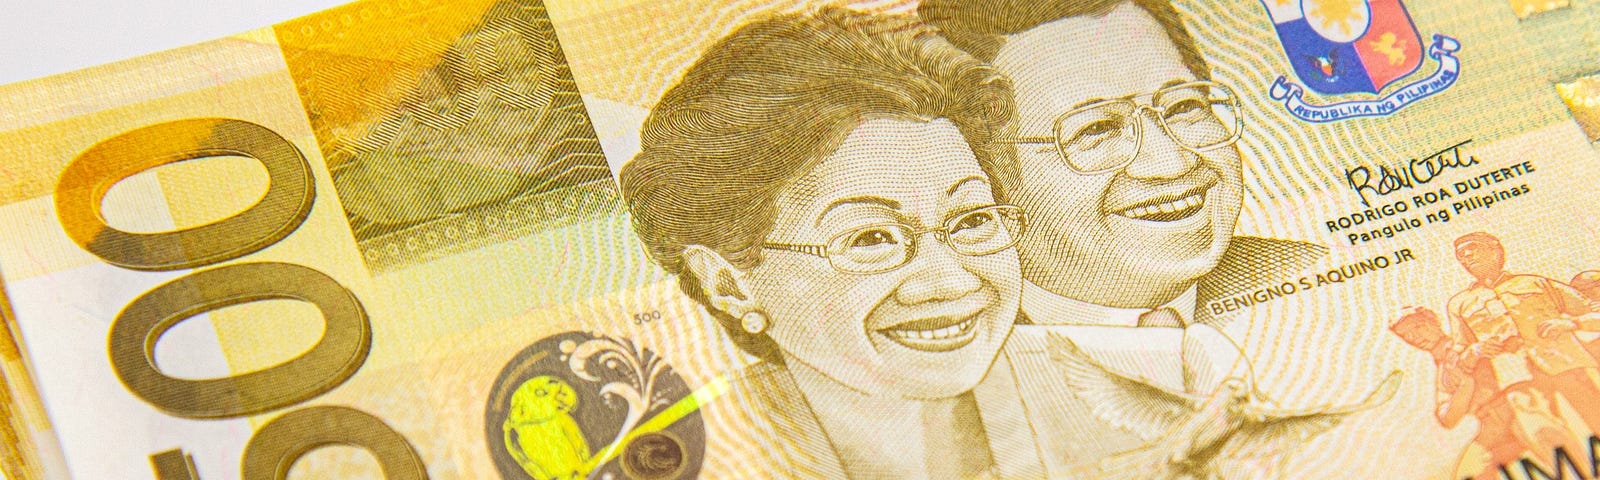 stacked 500 peso bills